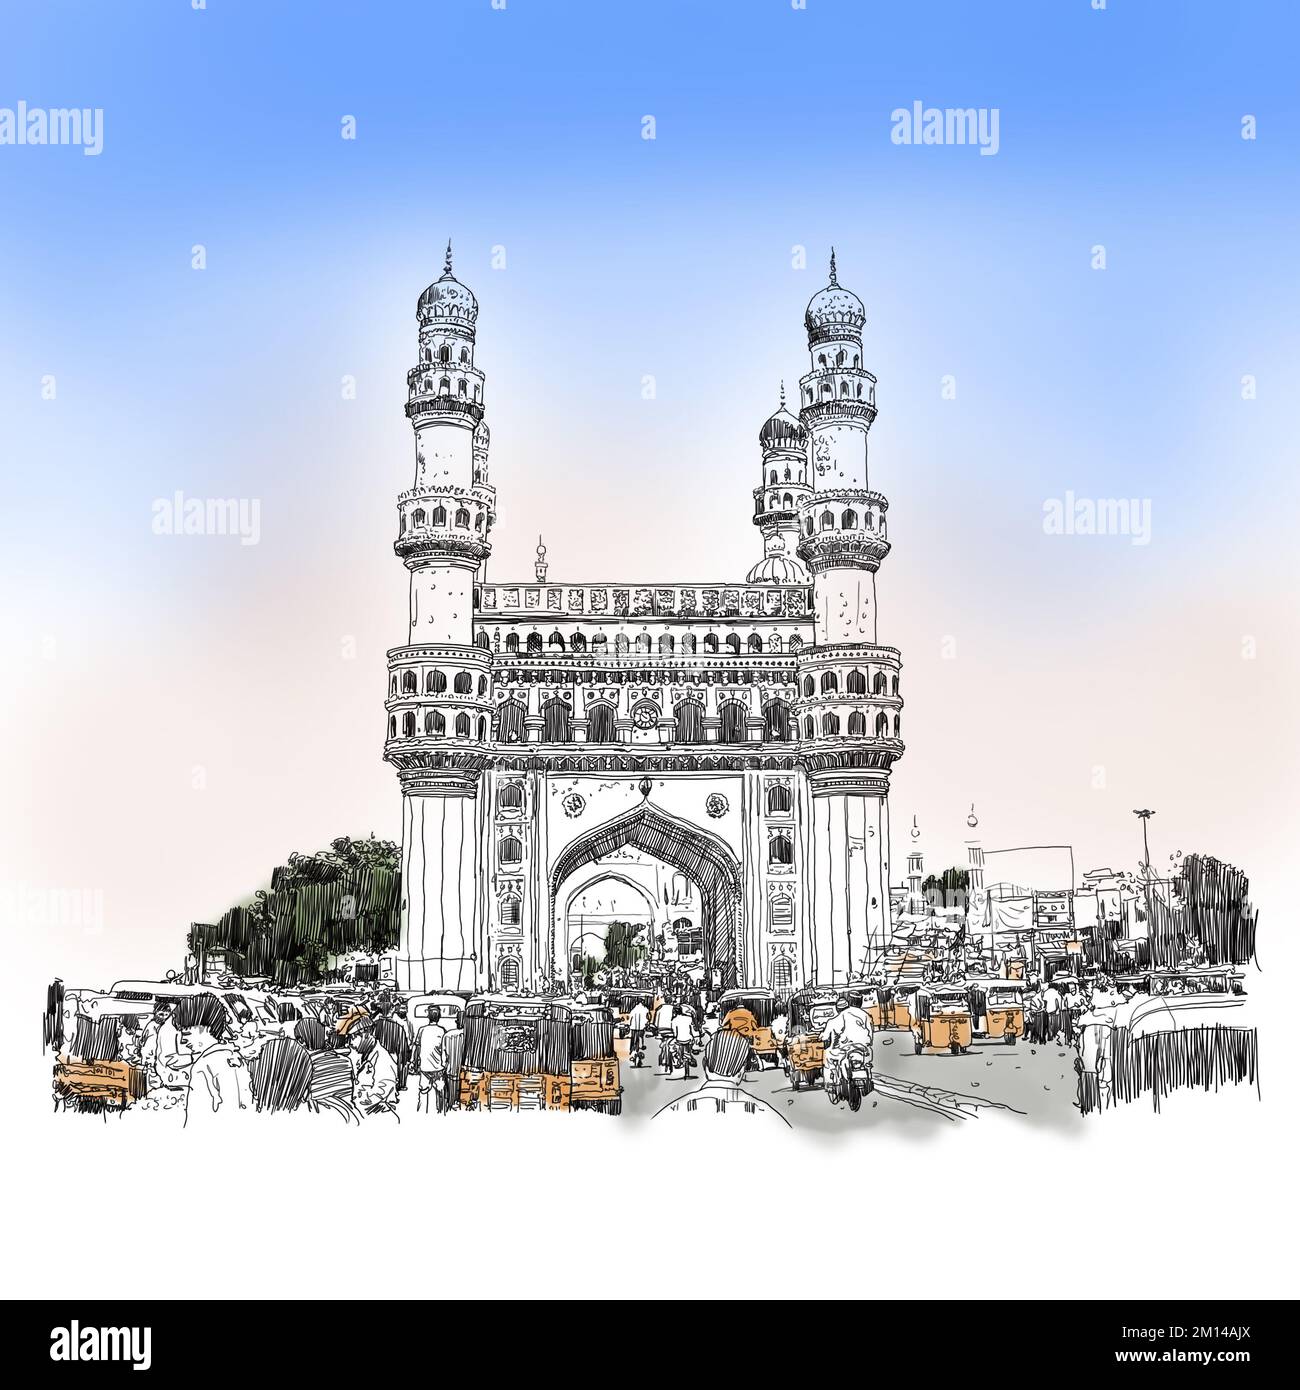 Charminar Hyderabad India, illustration or sketch, hand drawn illustration, illustration on white background Indian tourist attraction Charminar Mahal Stock Photo